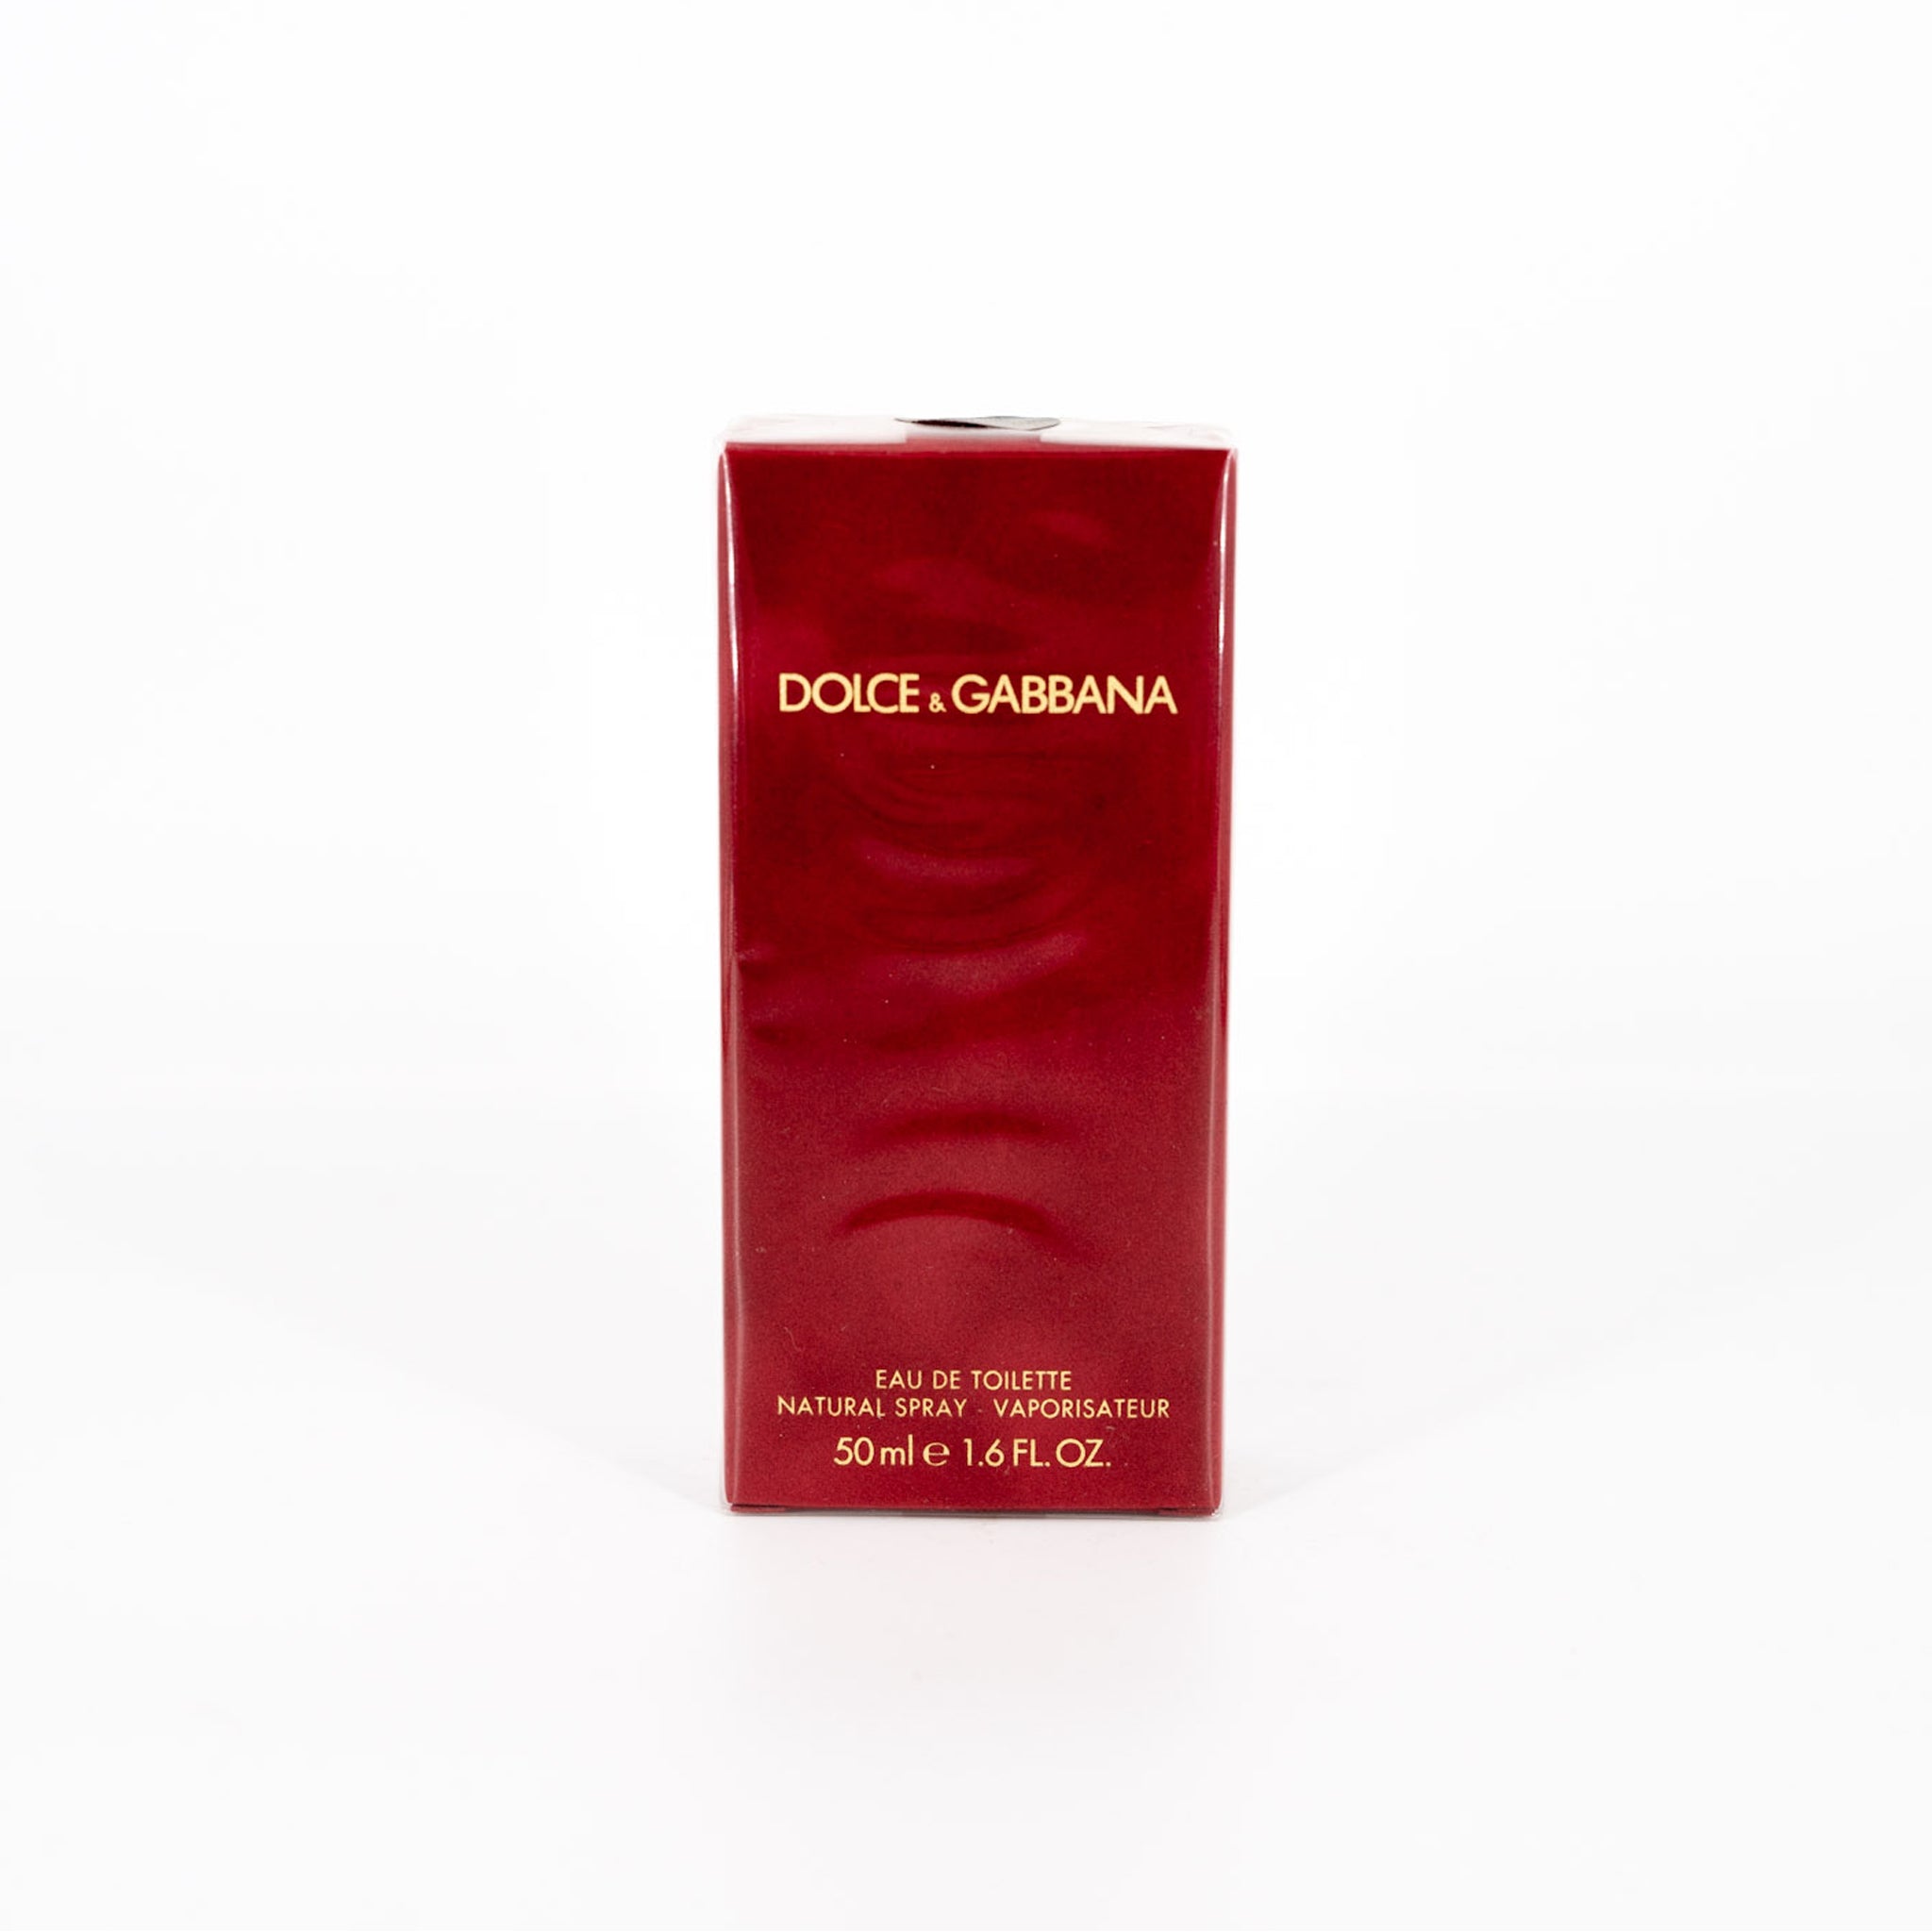 & Gabbana (Classic by Dolce Gabbana for Women EDT – FragranceOriginal